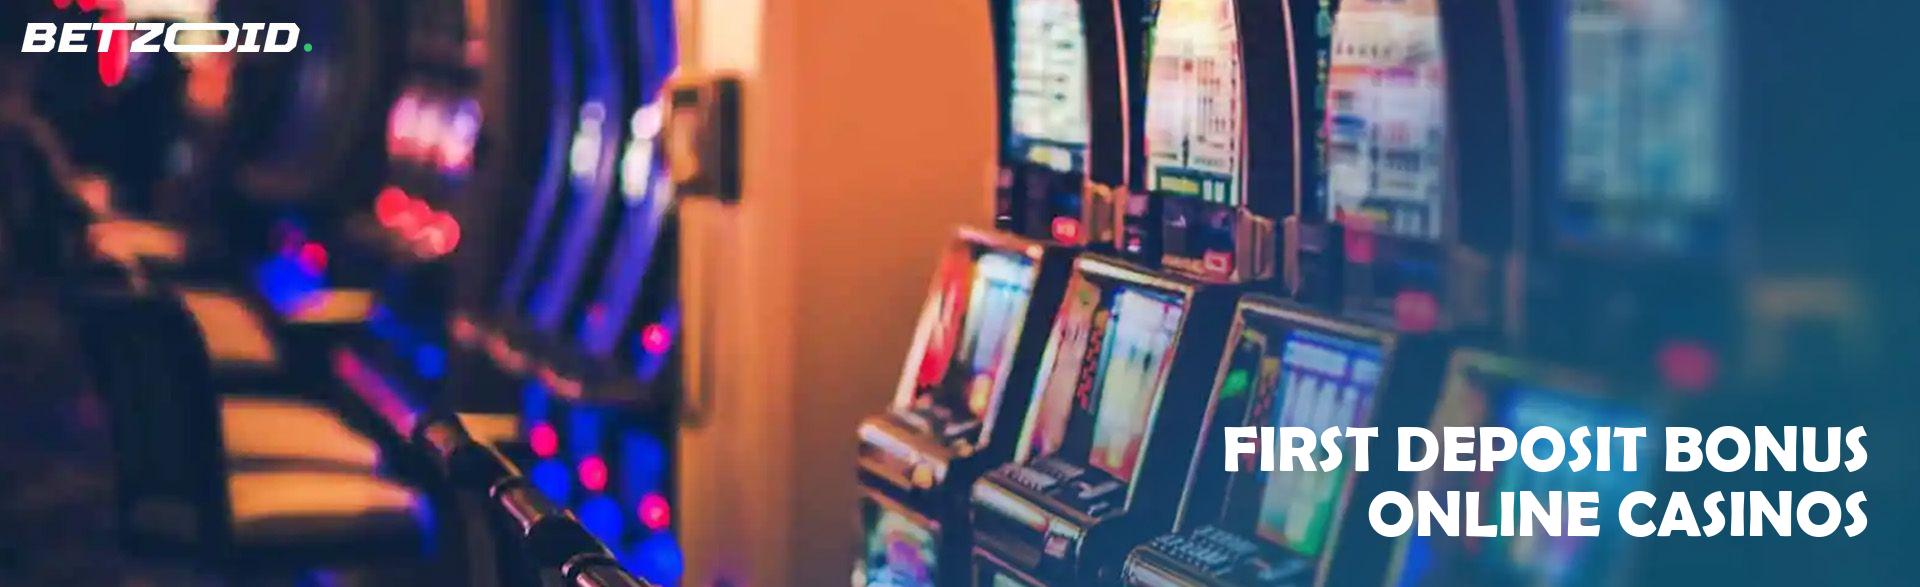 First Deposit Bonus Online Casinos.